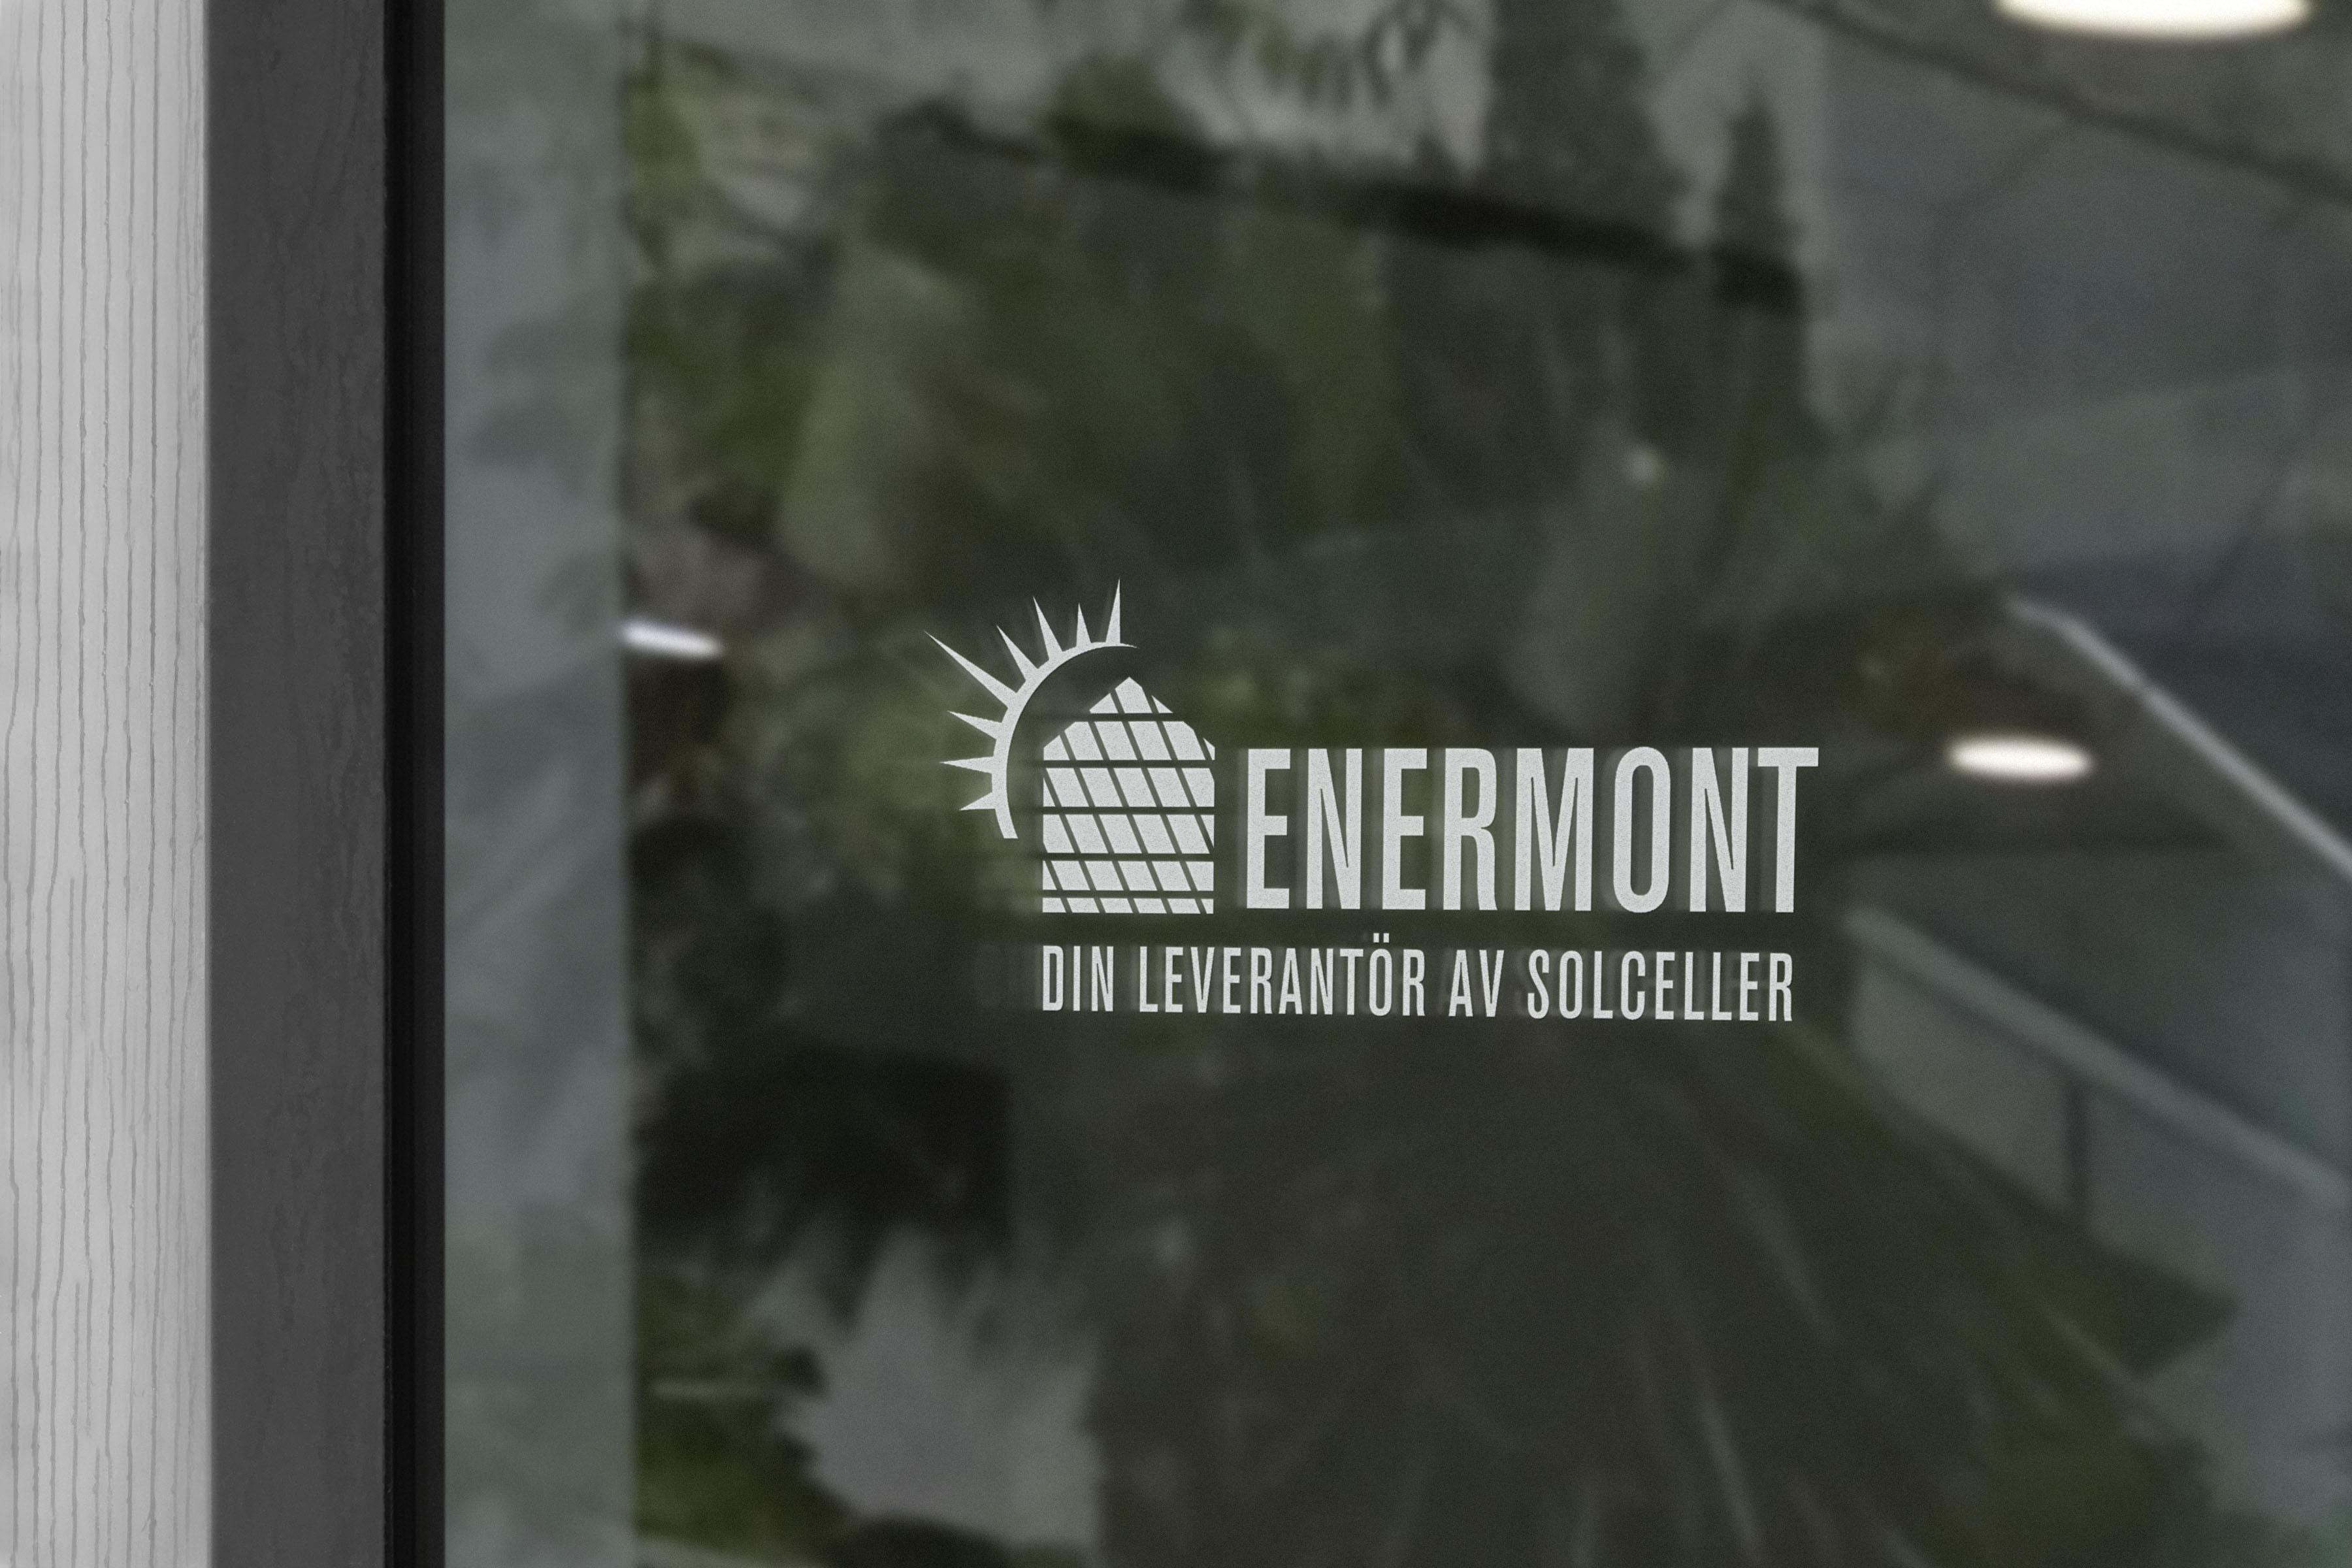 Enermont logo on a window